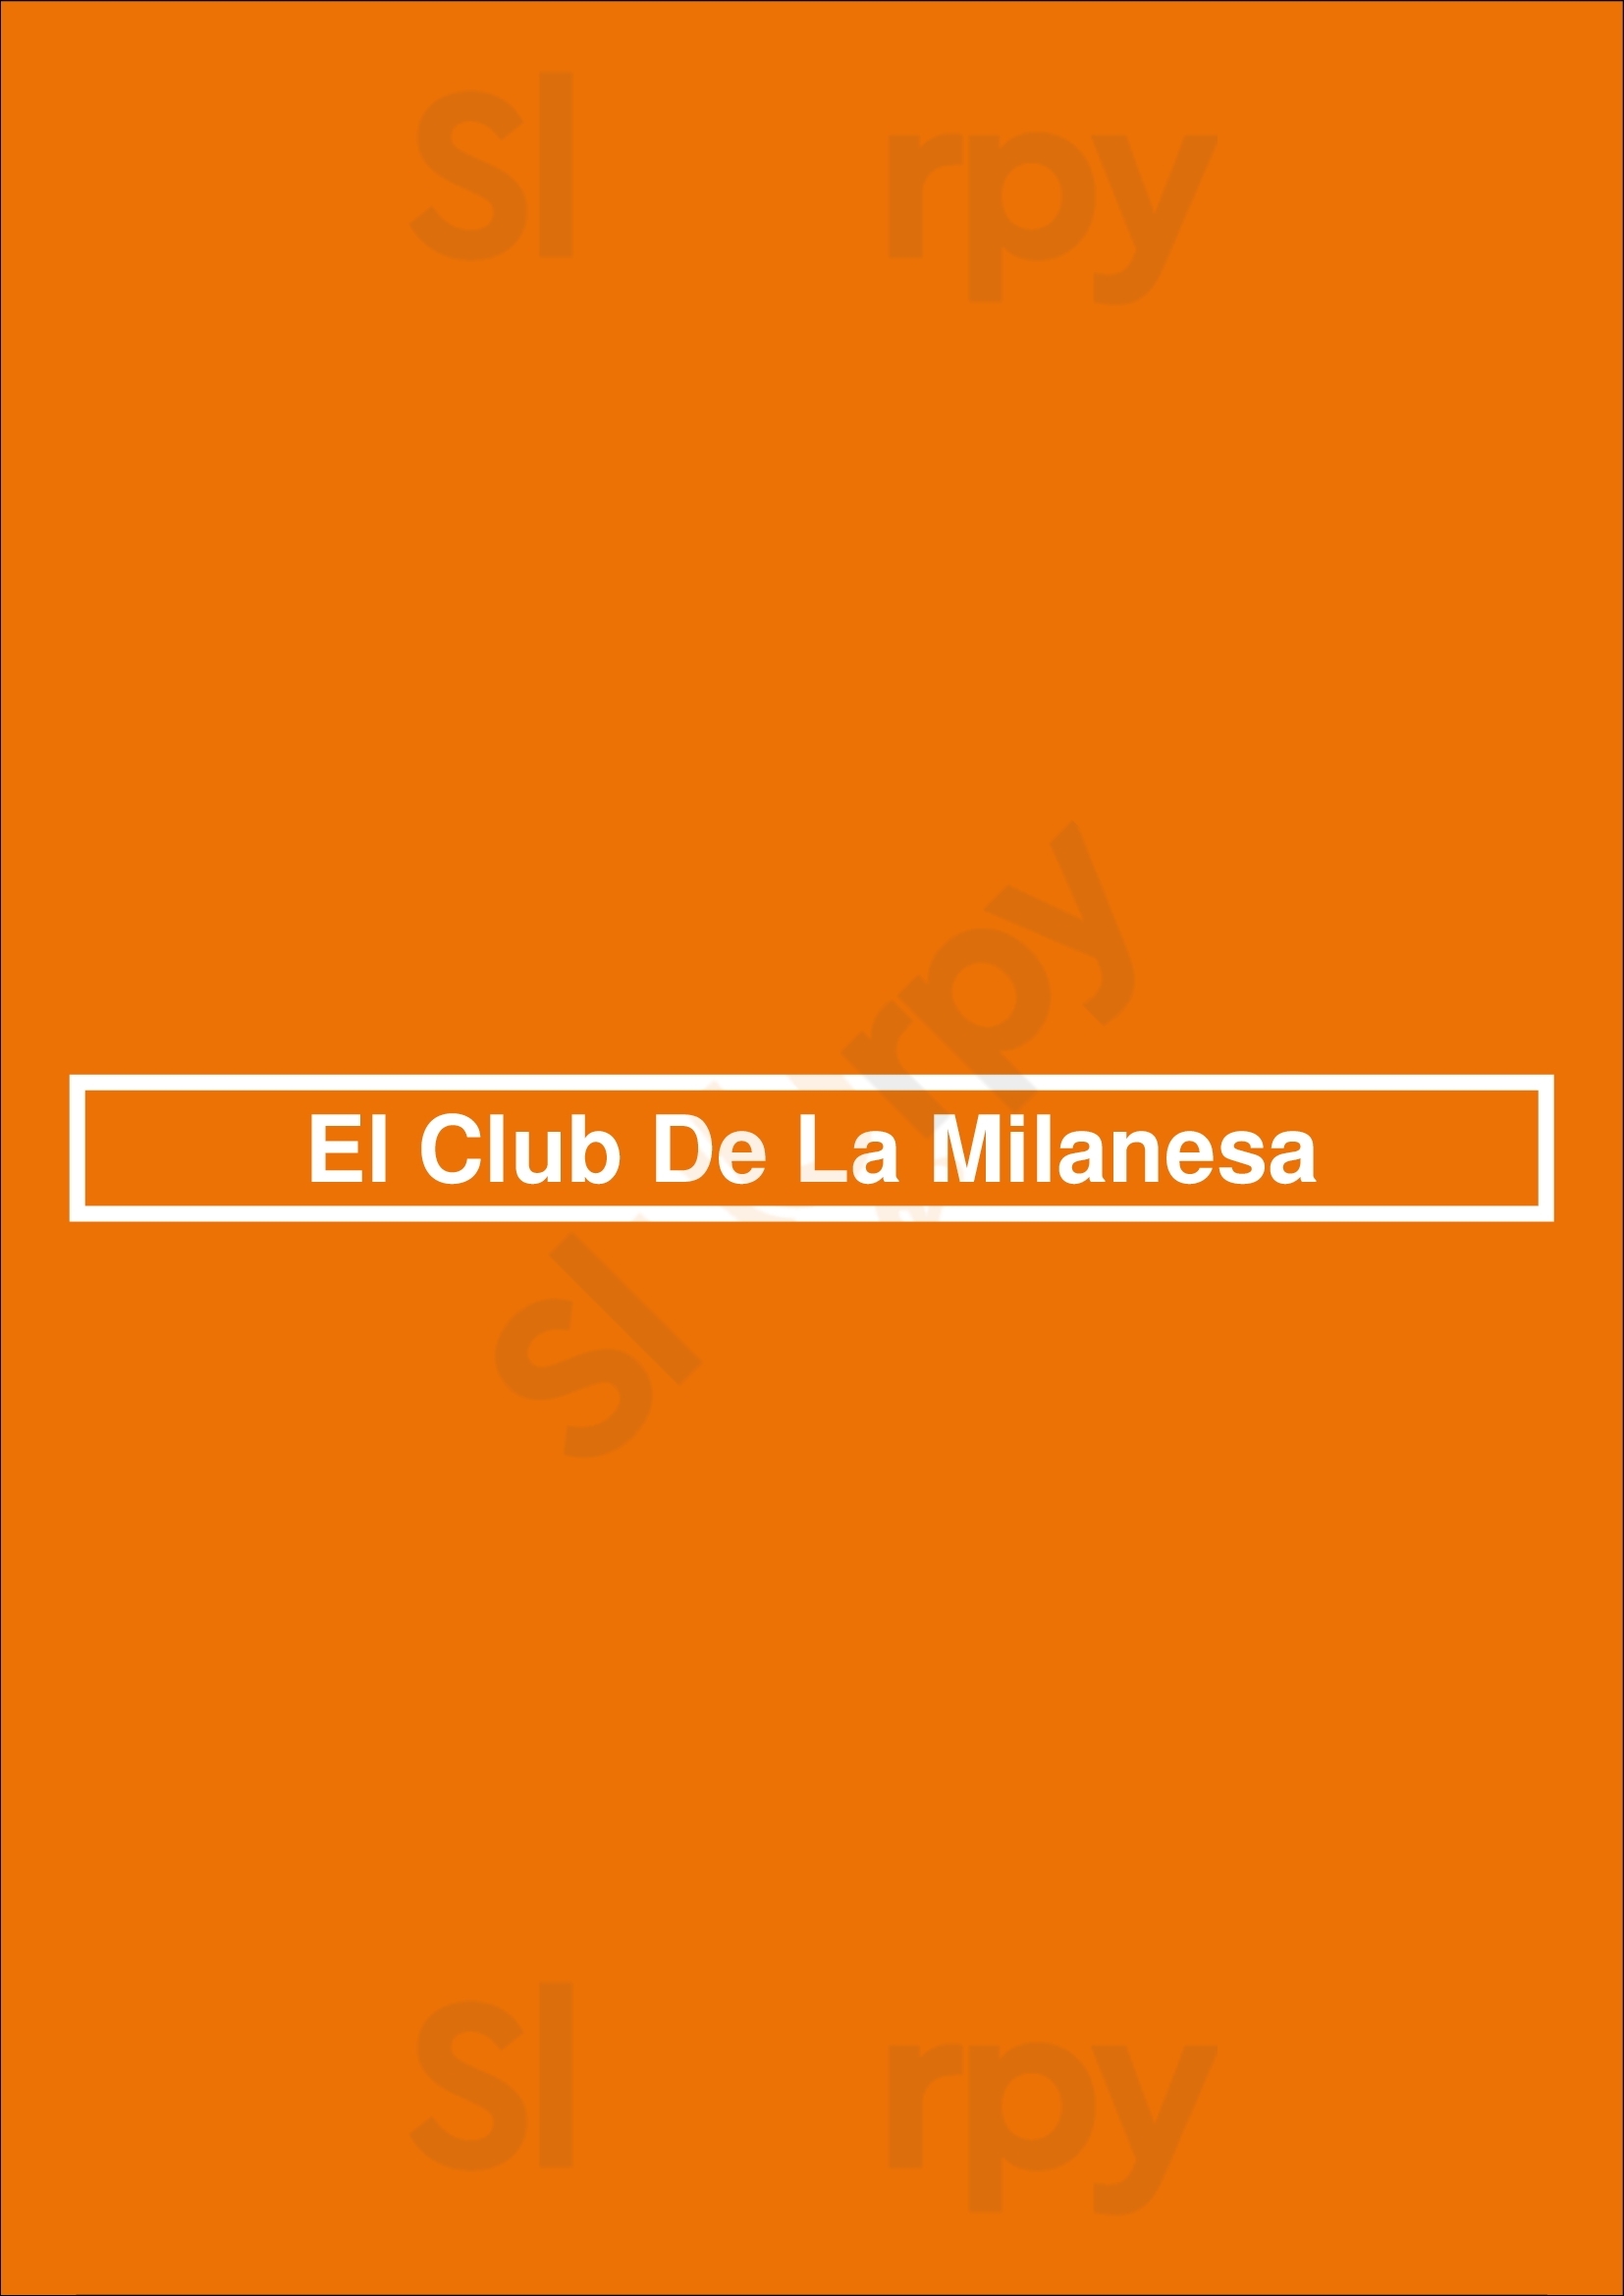 El Club De La Milanesa Distrito Capital Federal Menu - 1